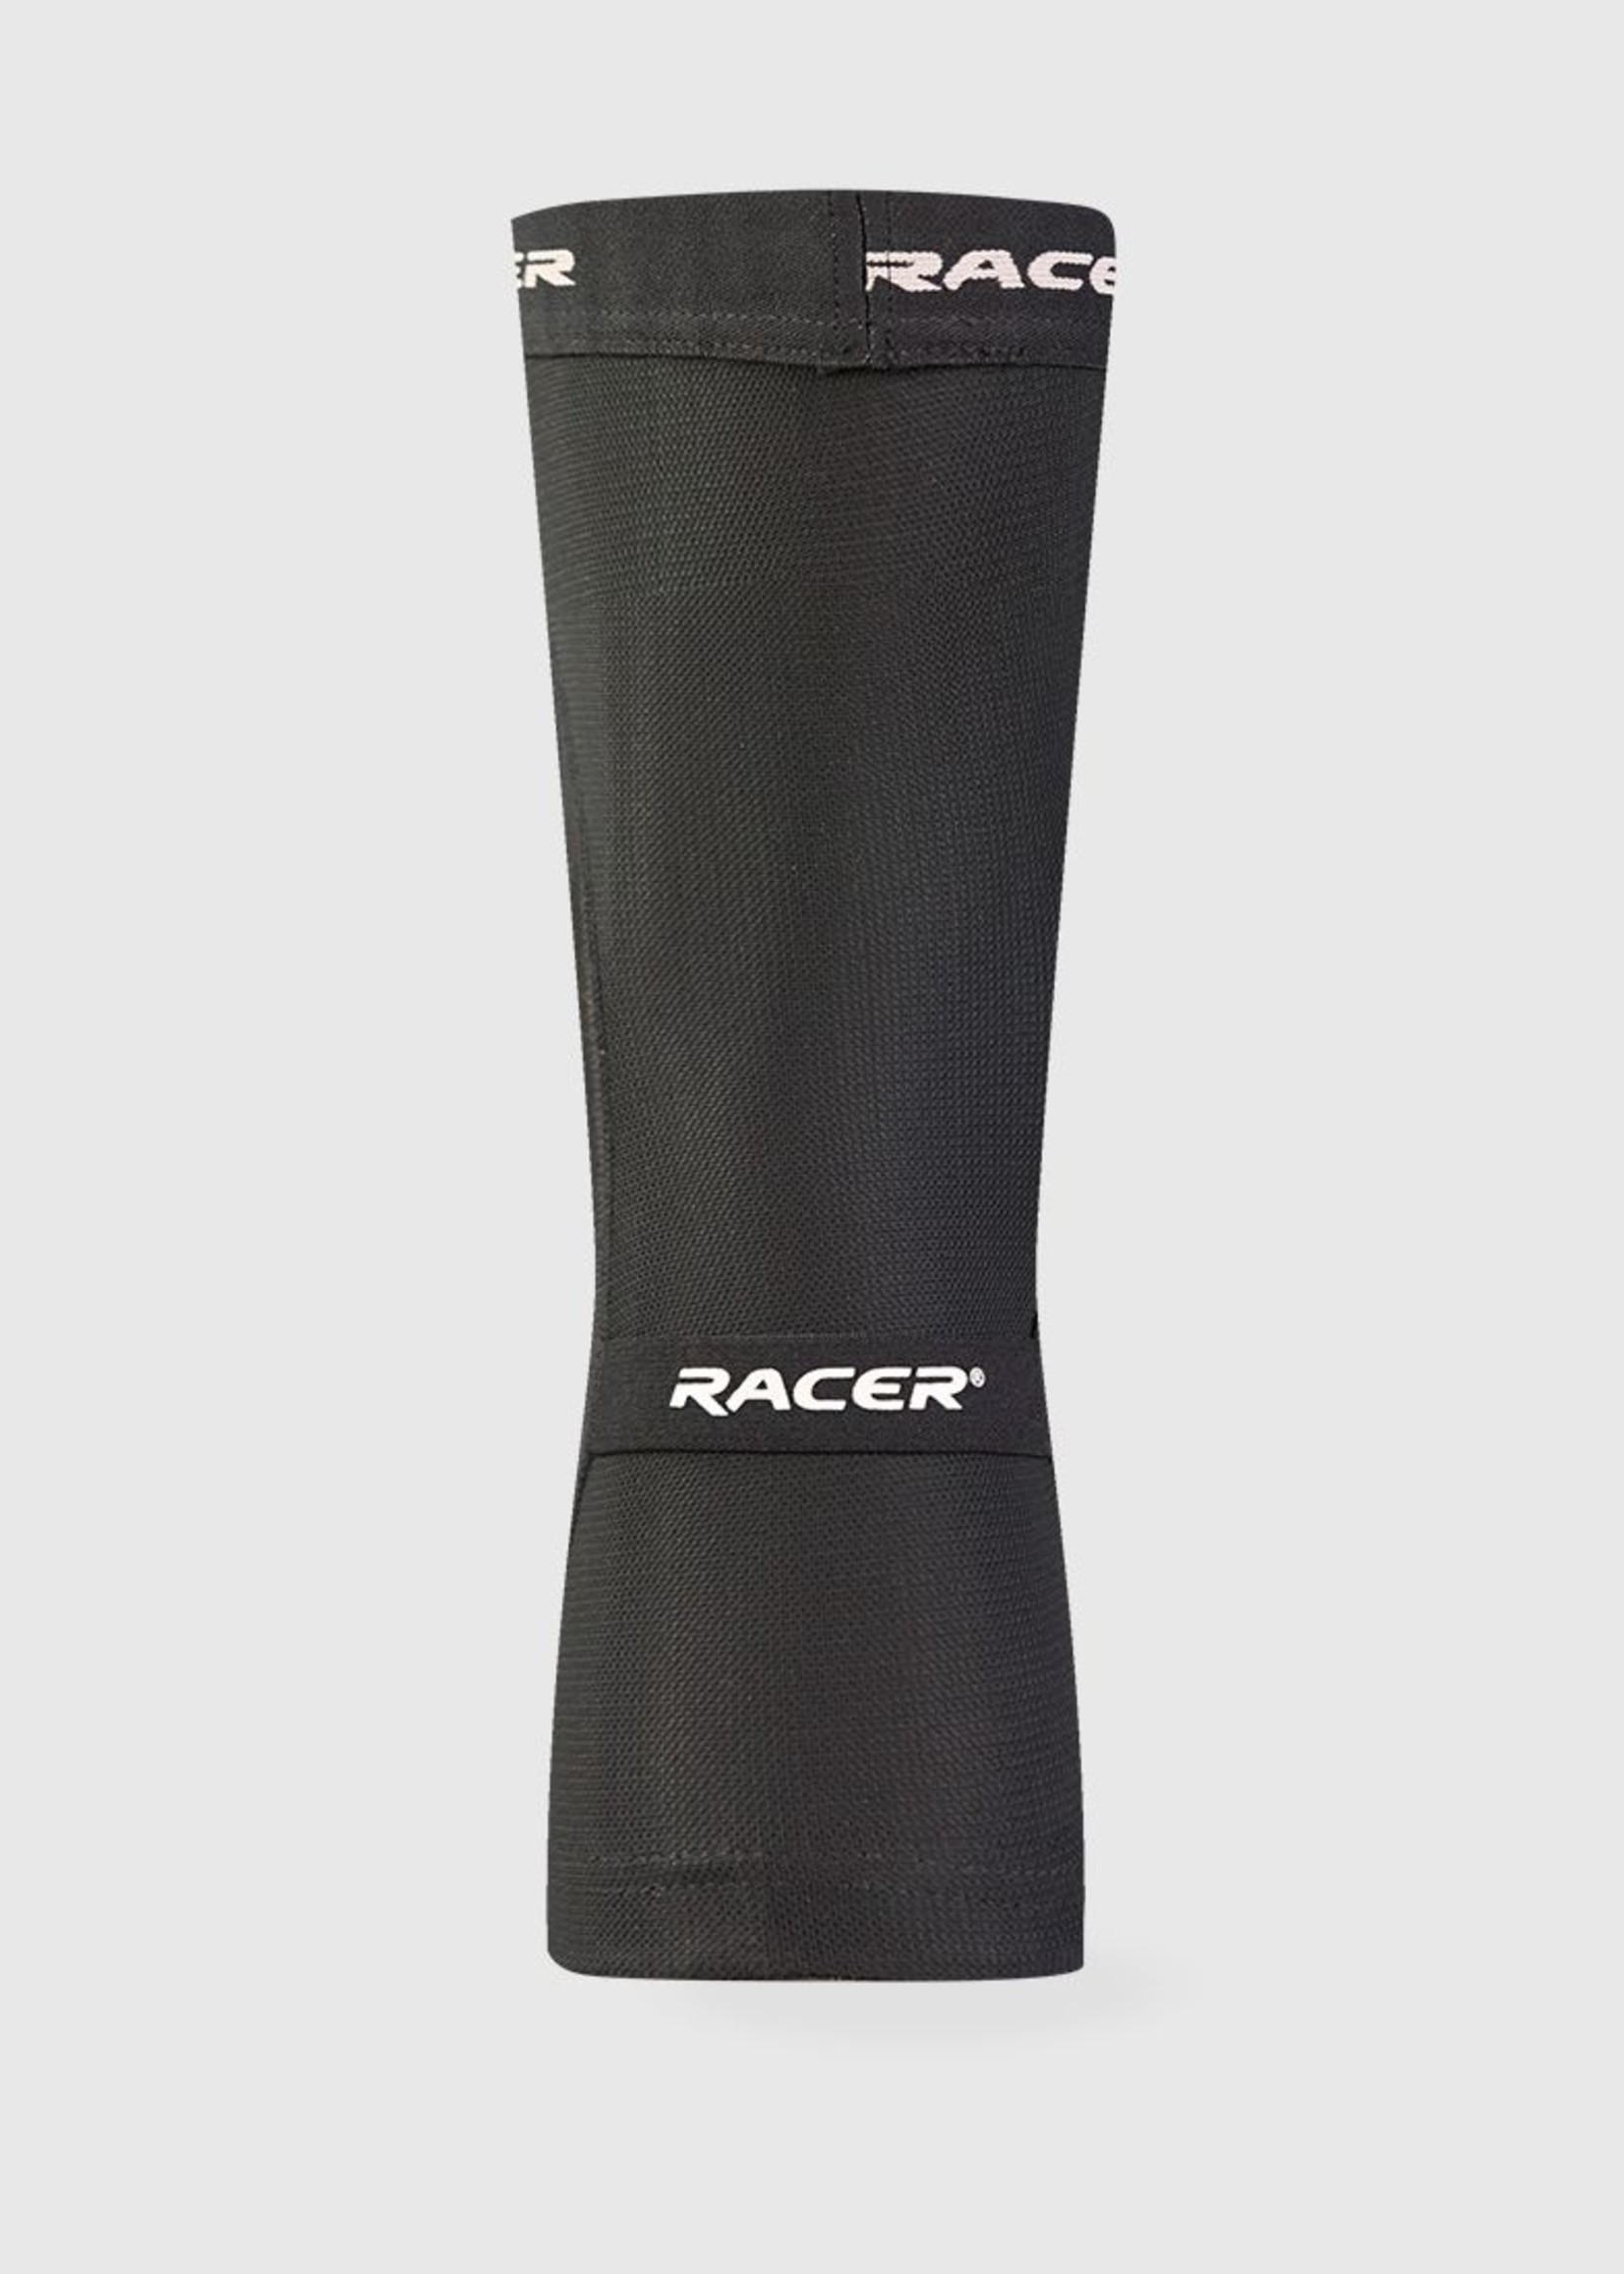 Racer Racer FlexAir Knee